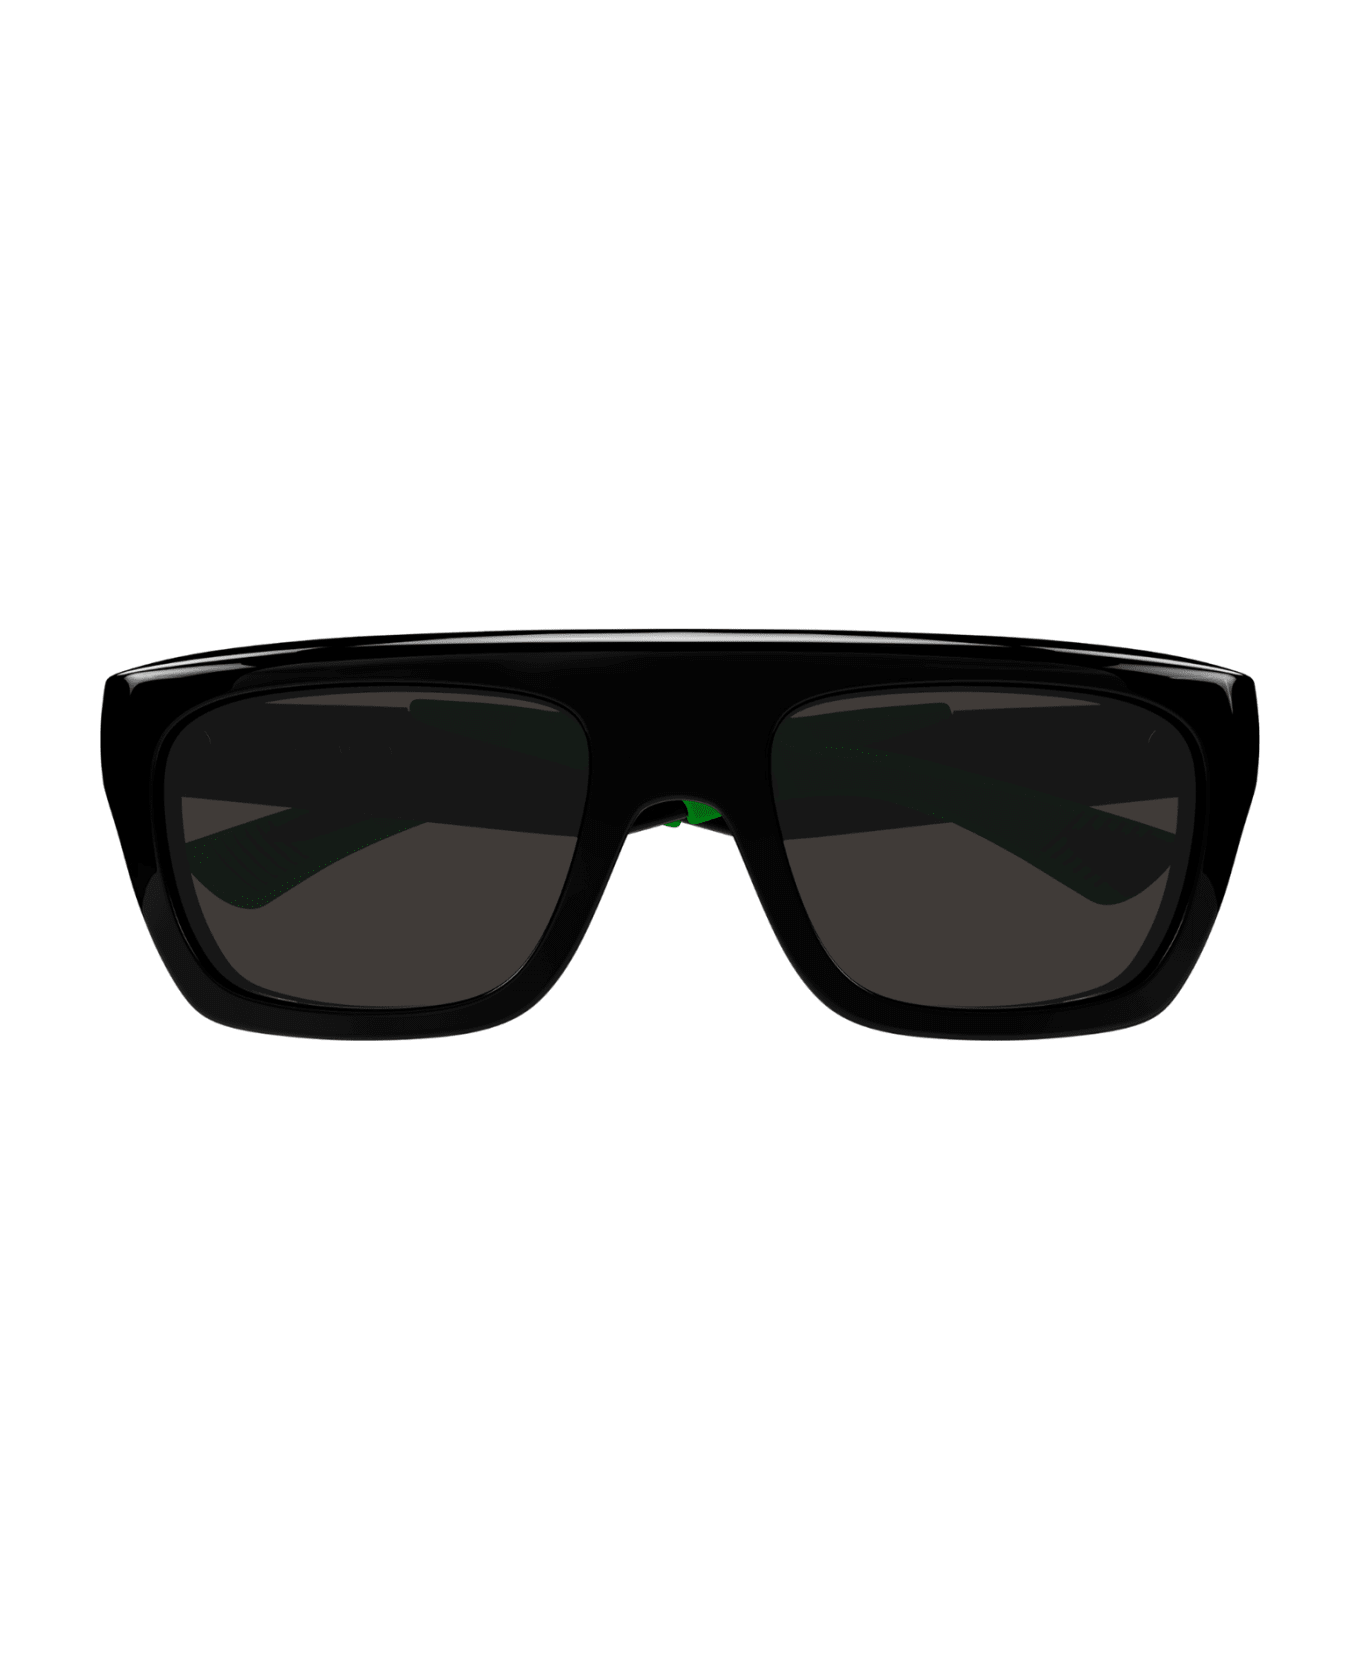 Bottega Veneta Eyewear 1fbl4li0a - Jimmy Choo Black Marvin Sunglasses